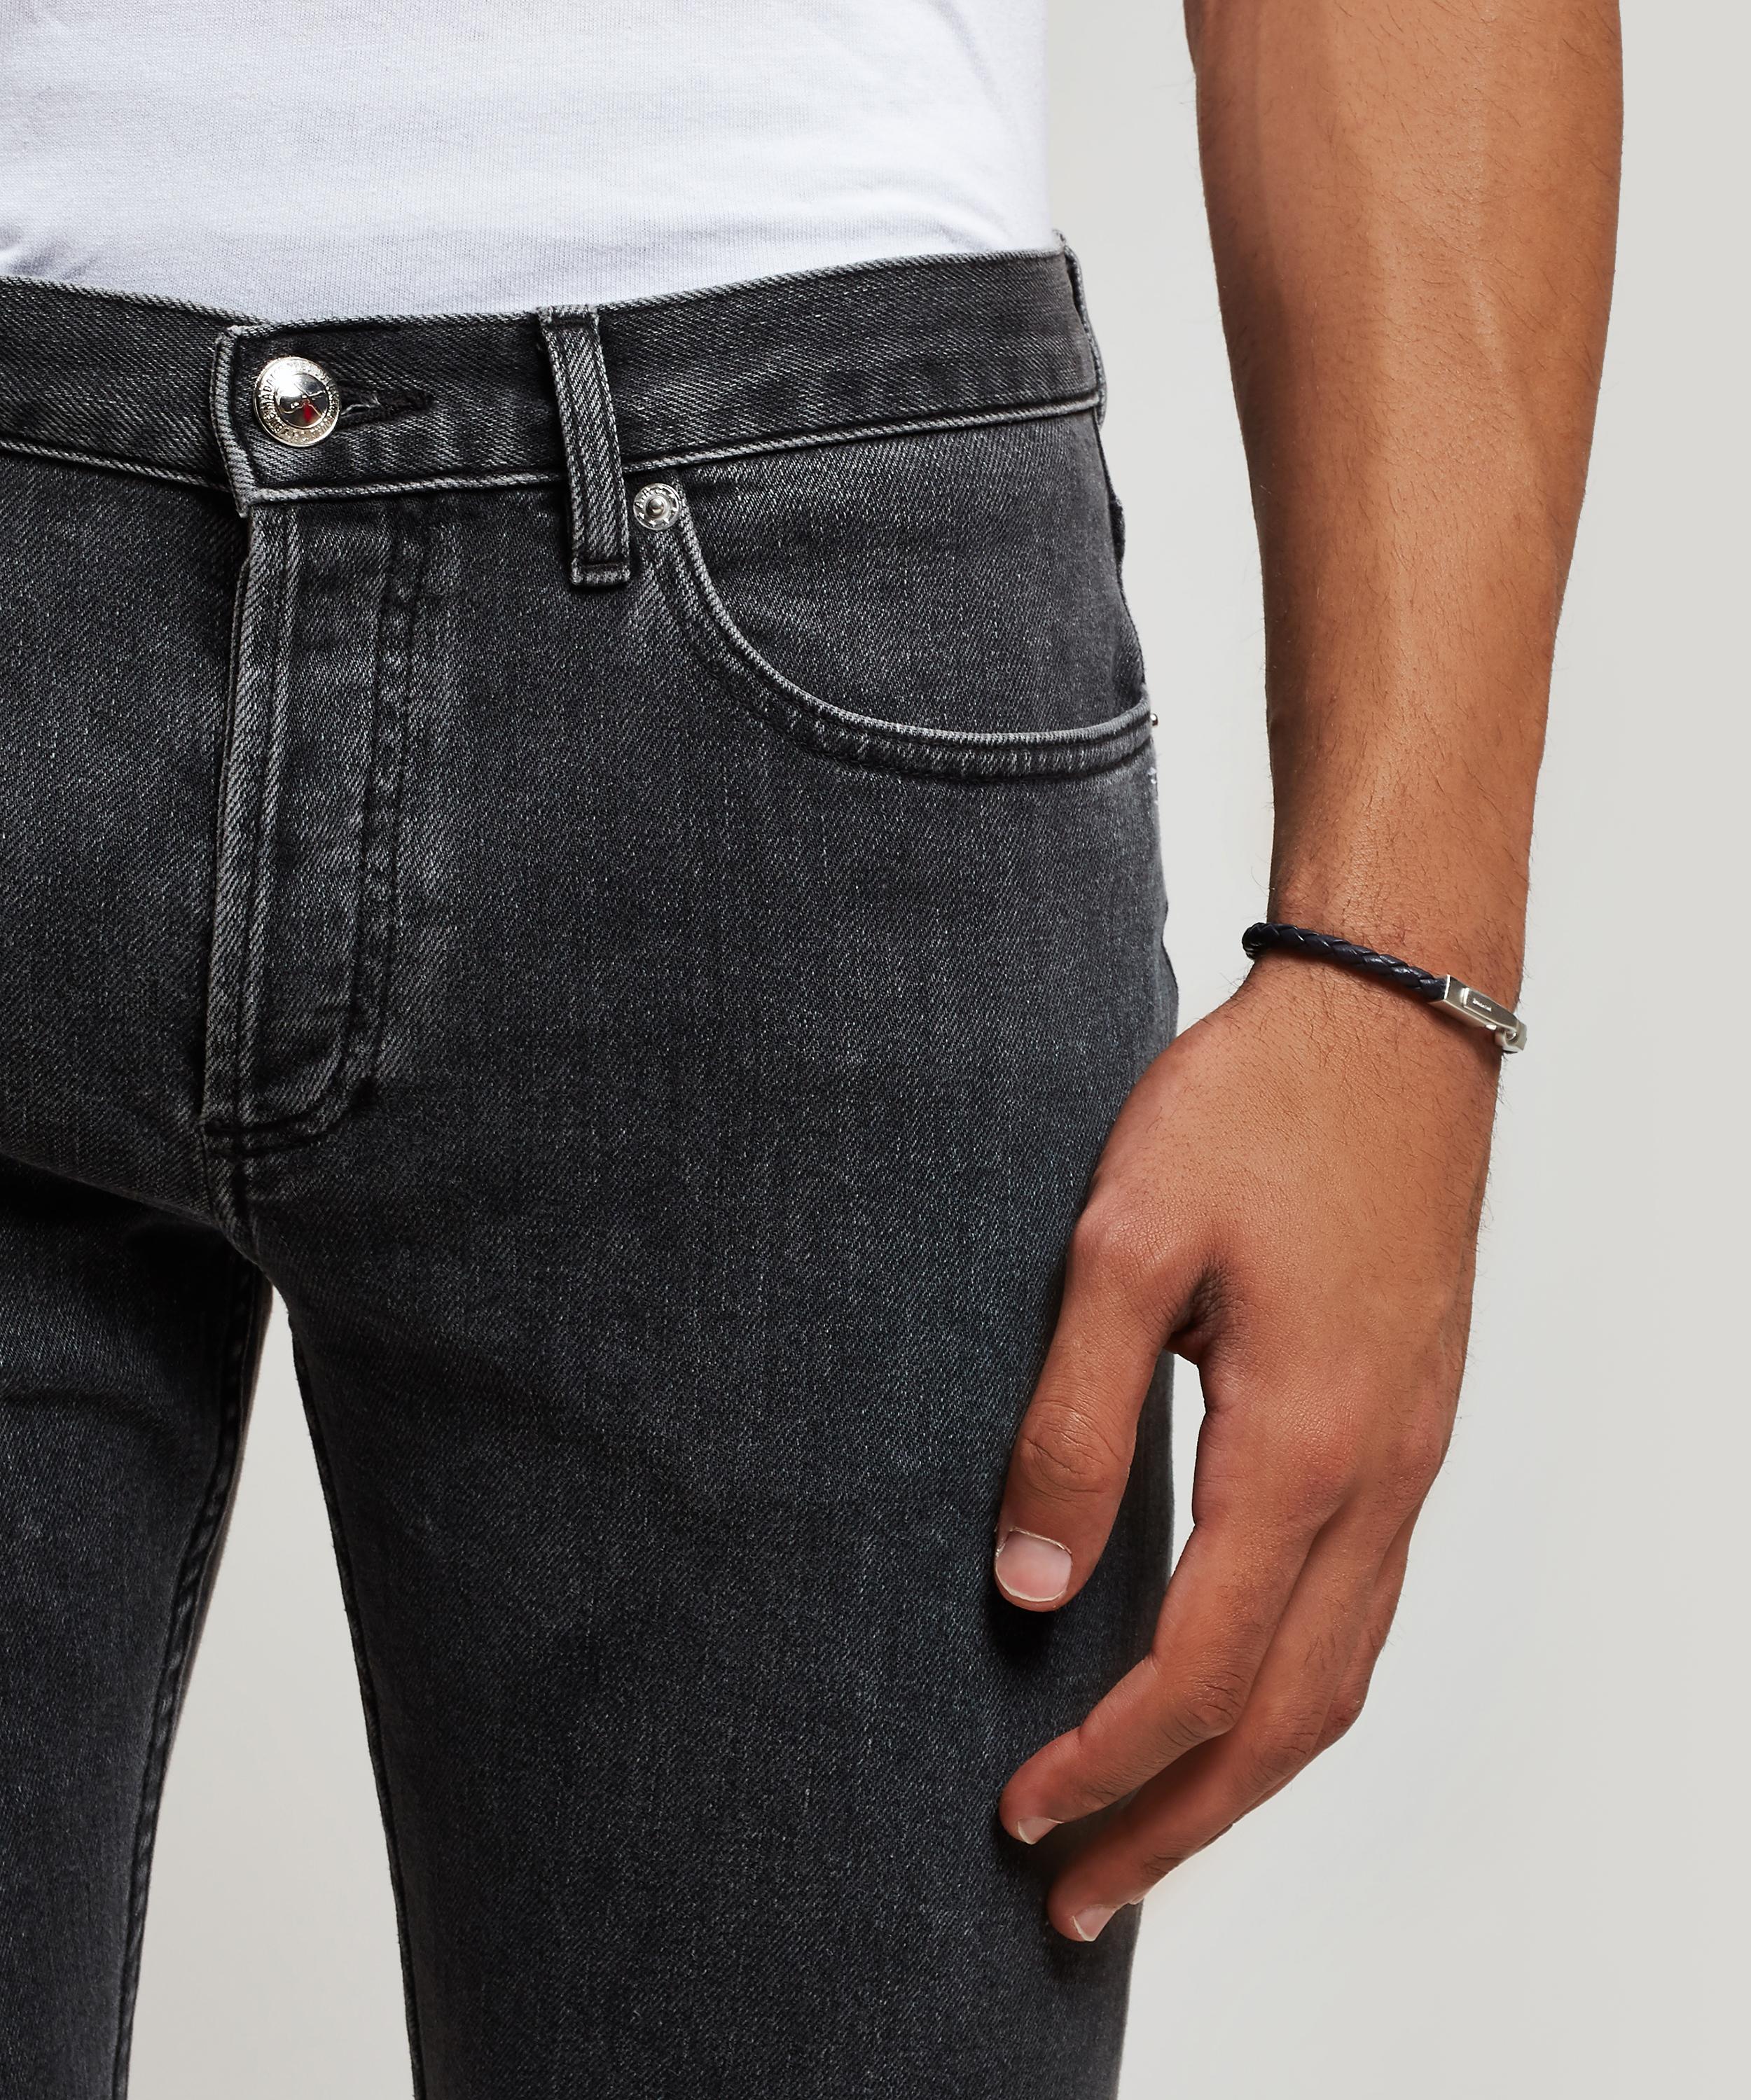 petit standard jeans